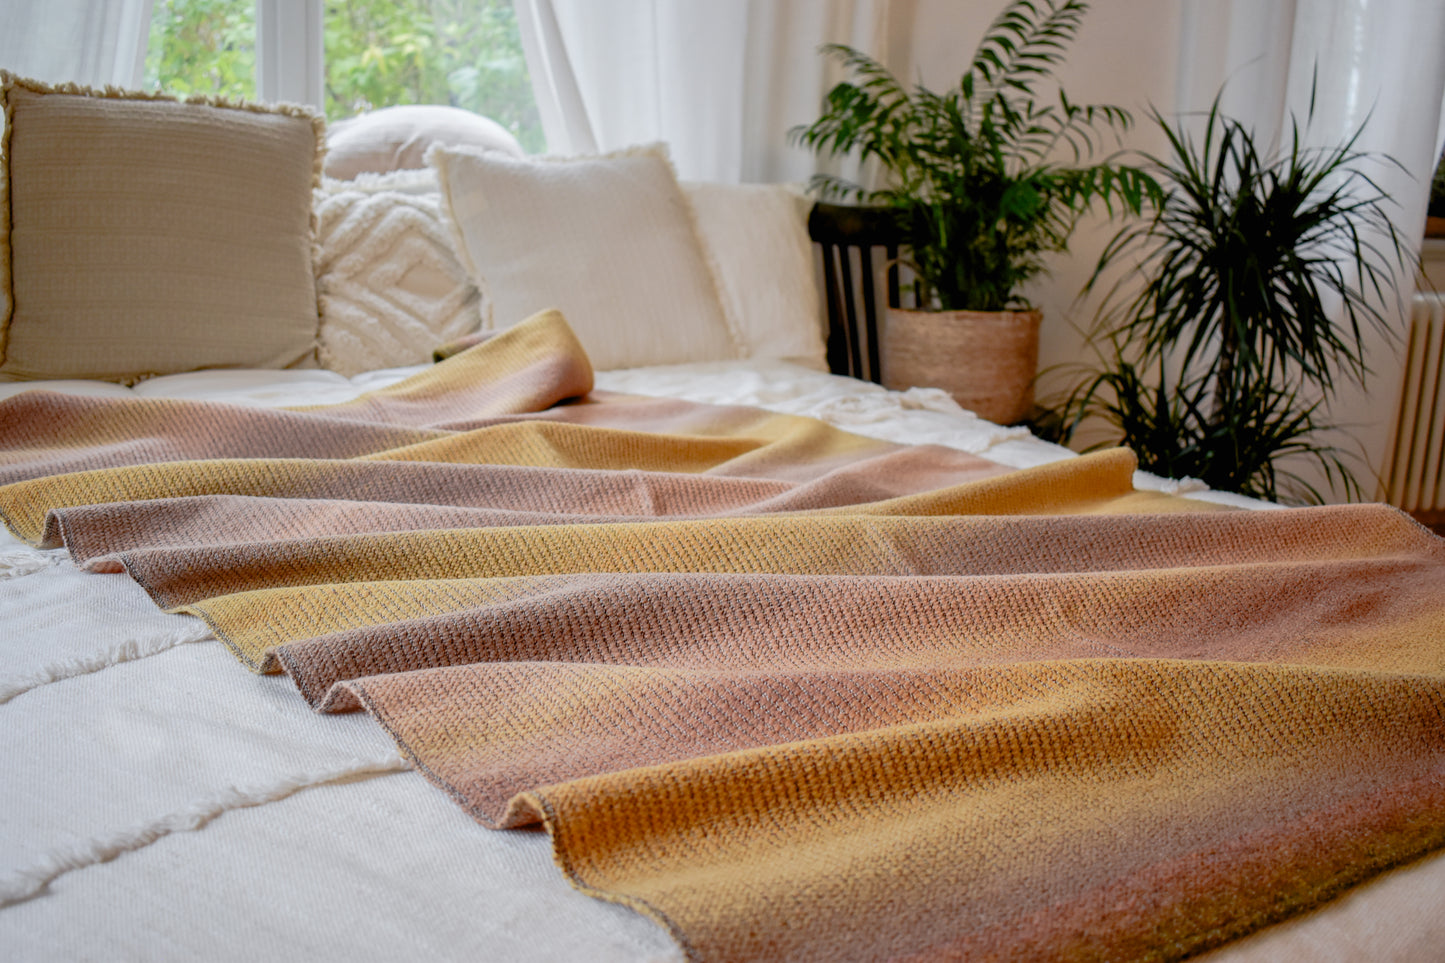 Hand-woven sand/yellow wool blanket / plaid (BATE 2)